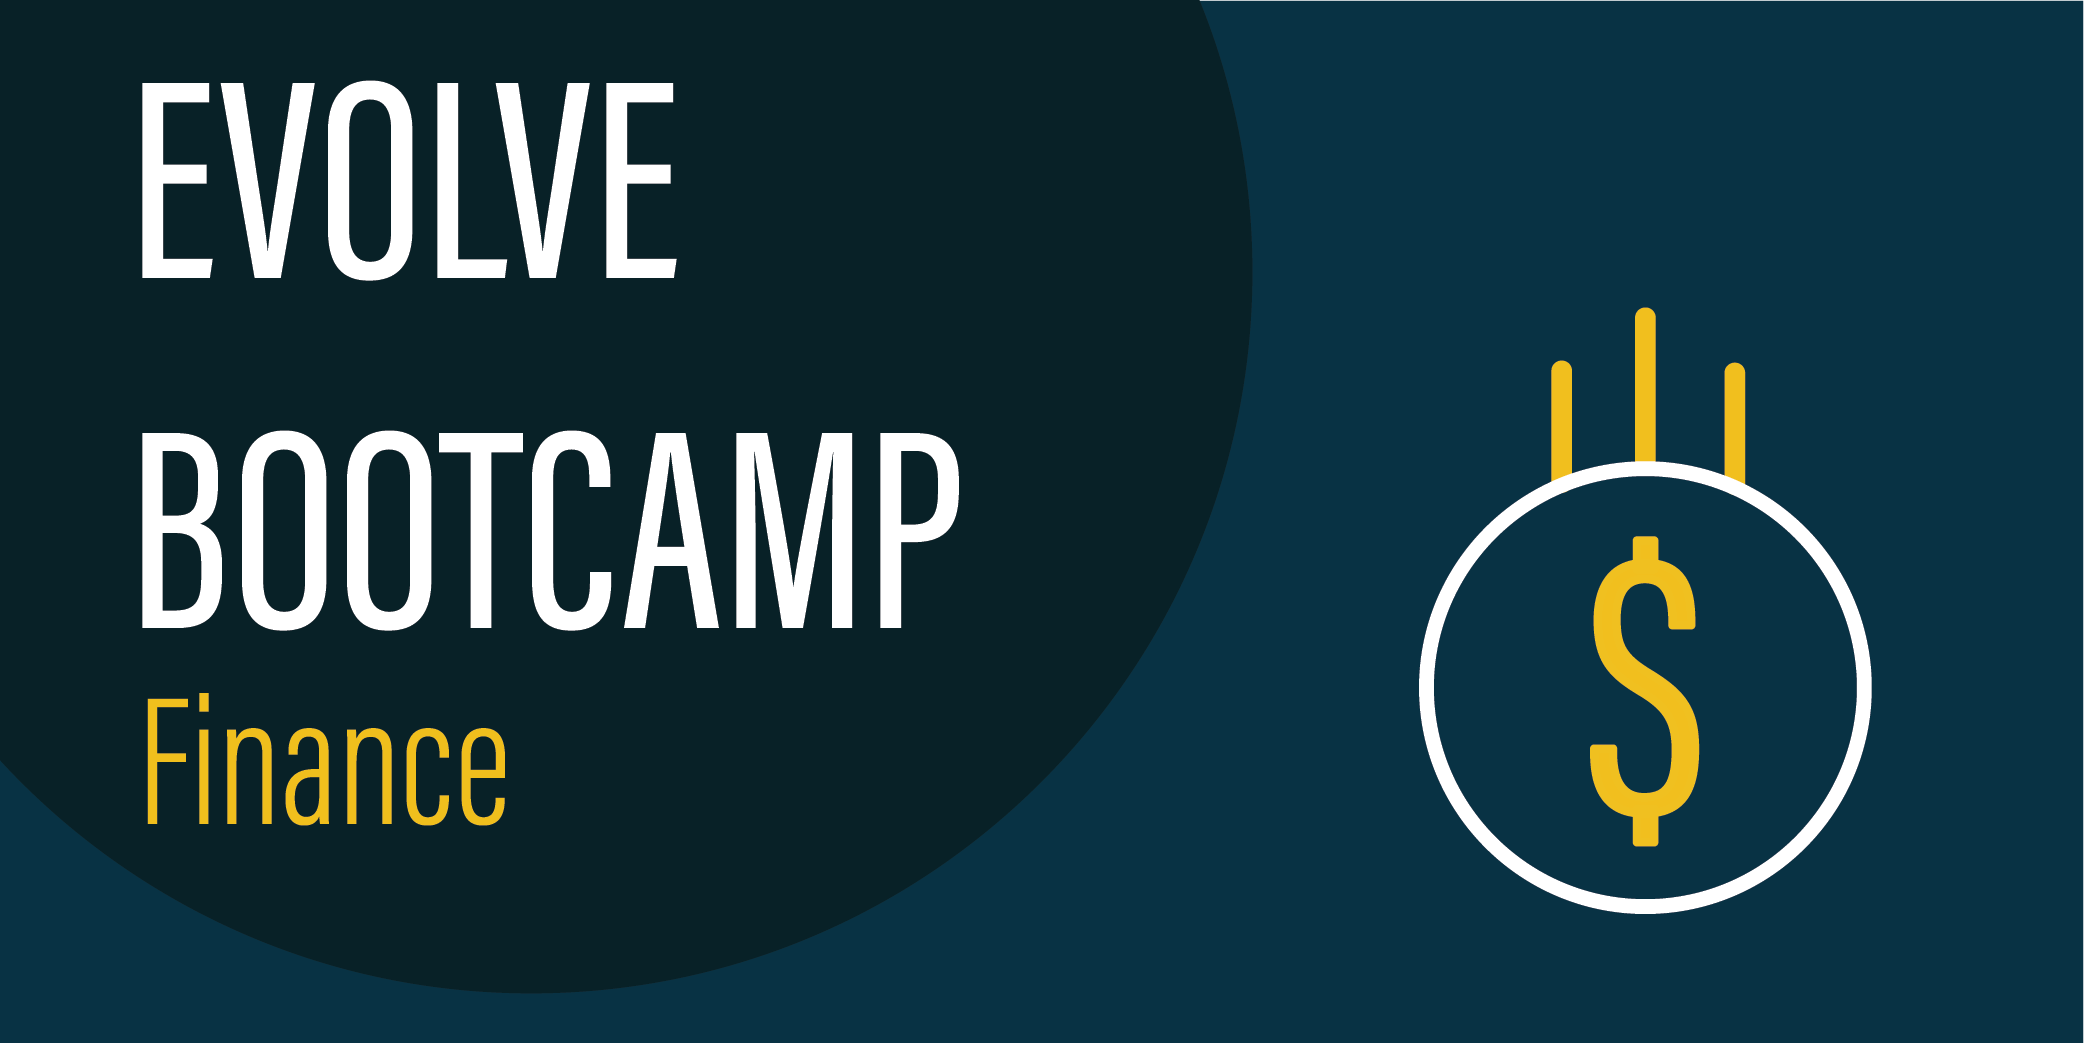 Evolve Bootcamp Finance